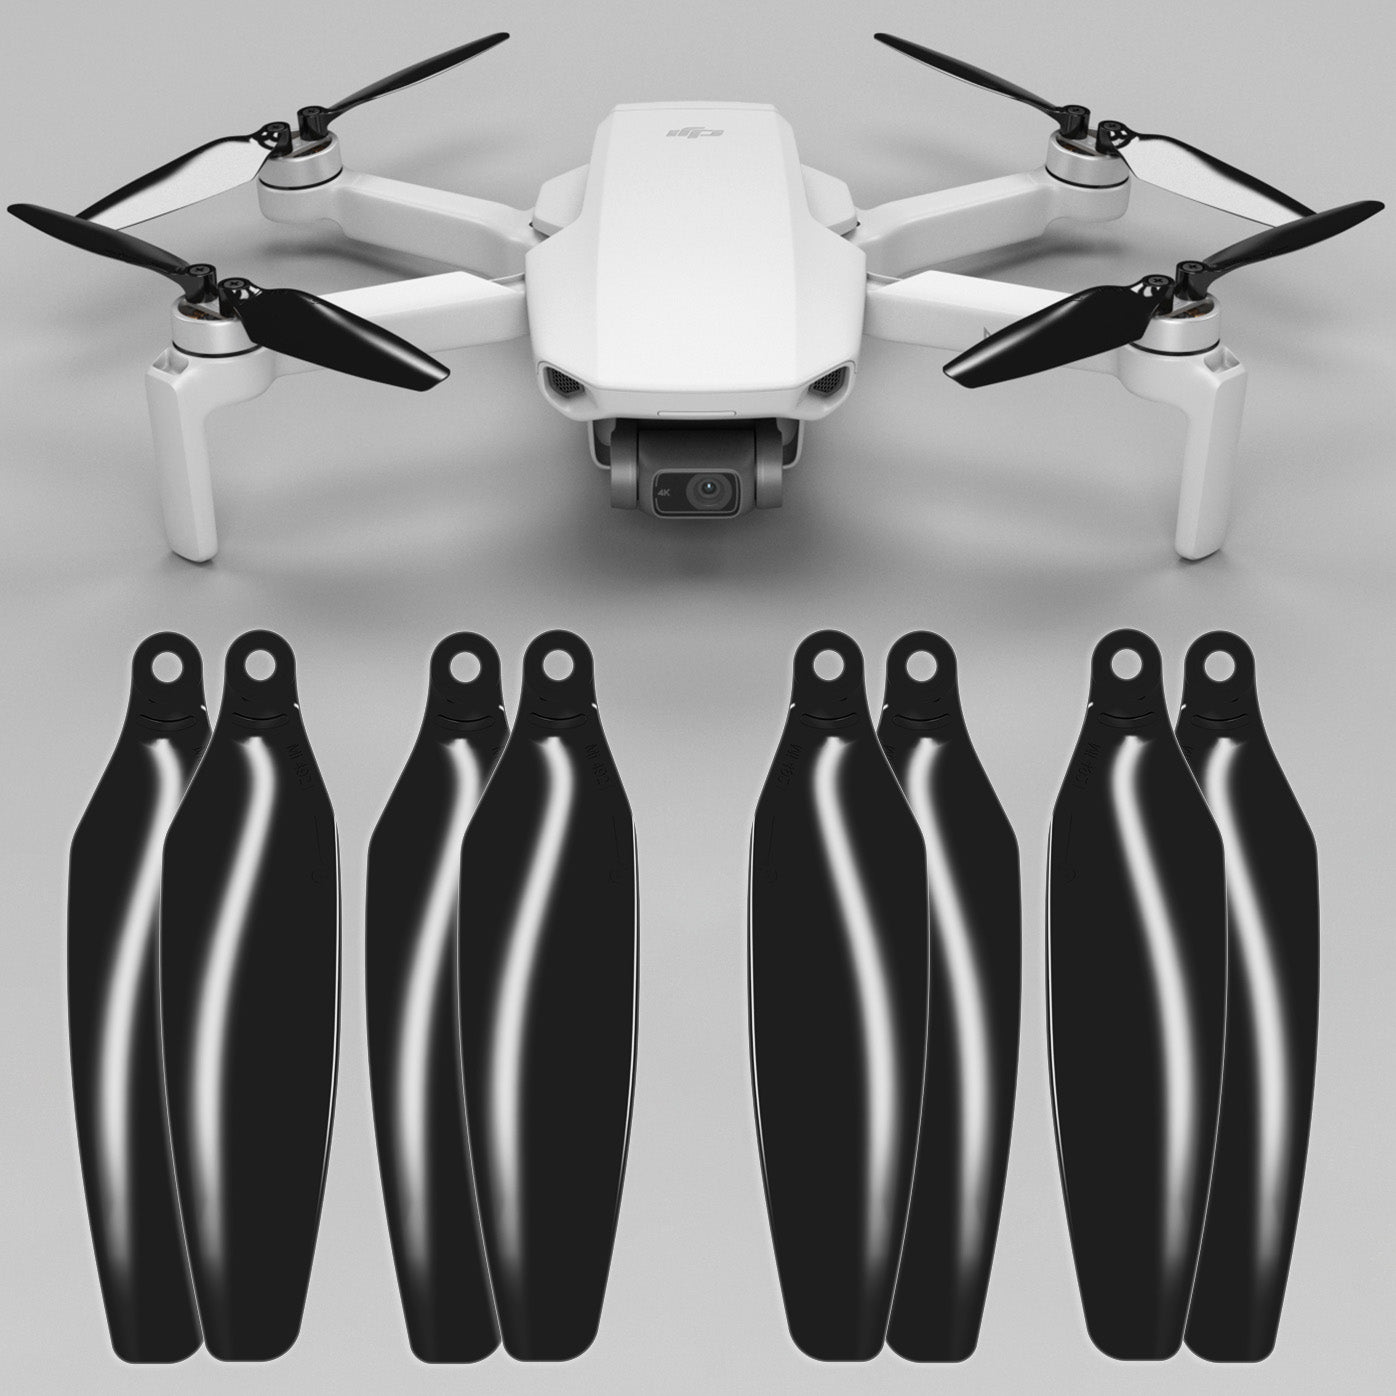 New DJI 'Mini SE' drone shows up looking like the Mavic Mini